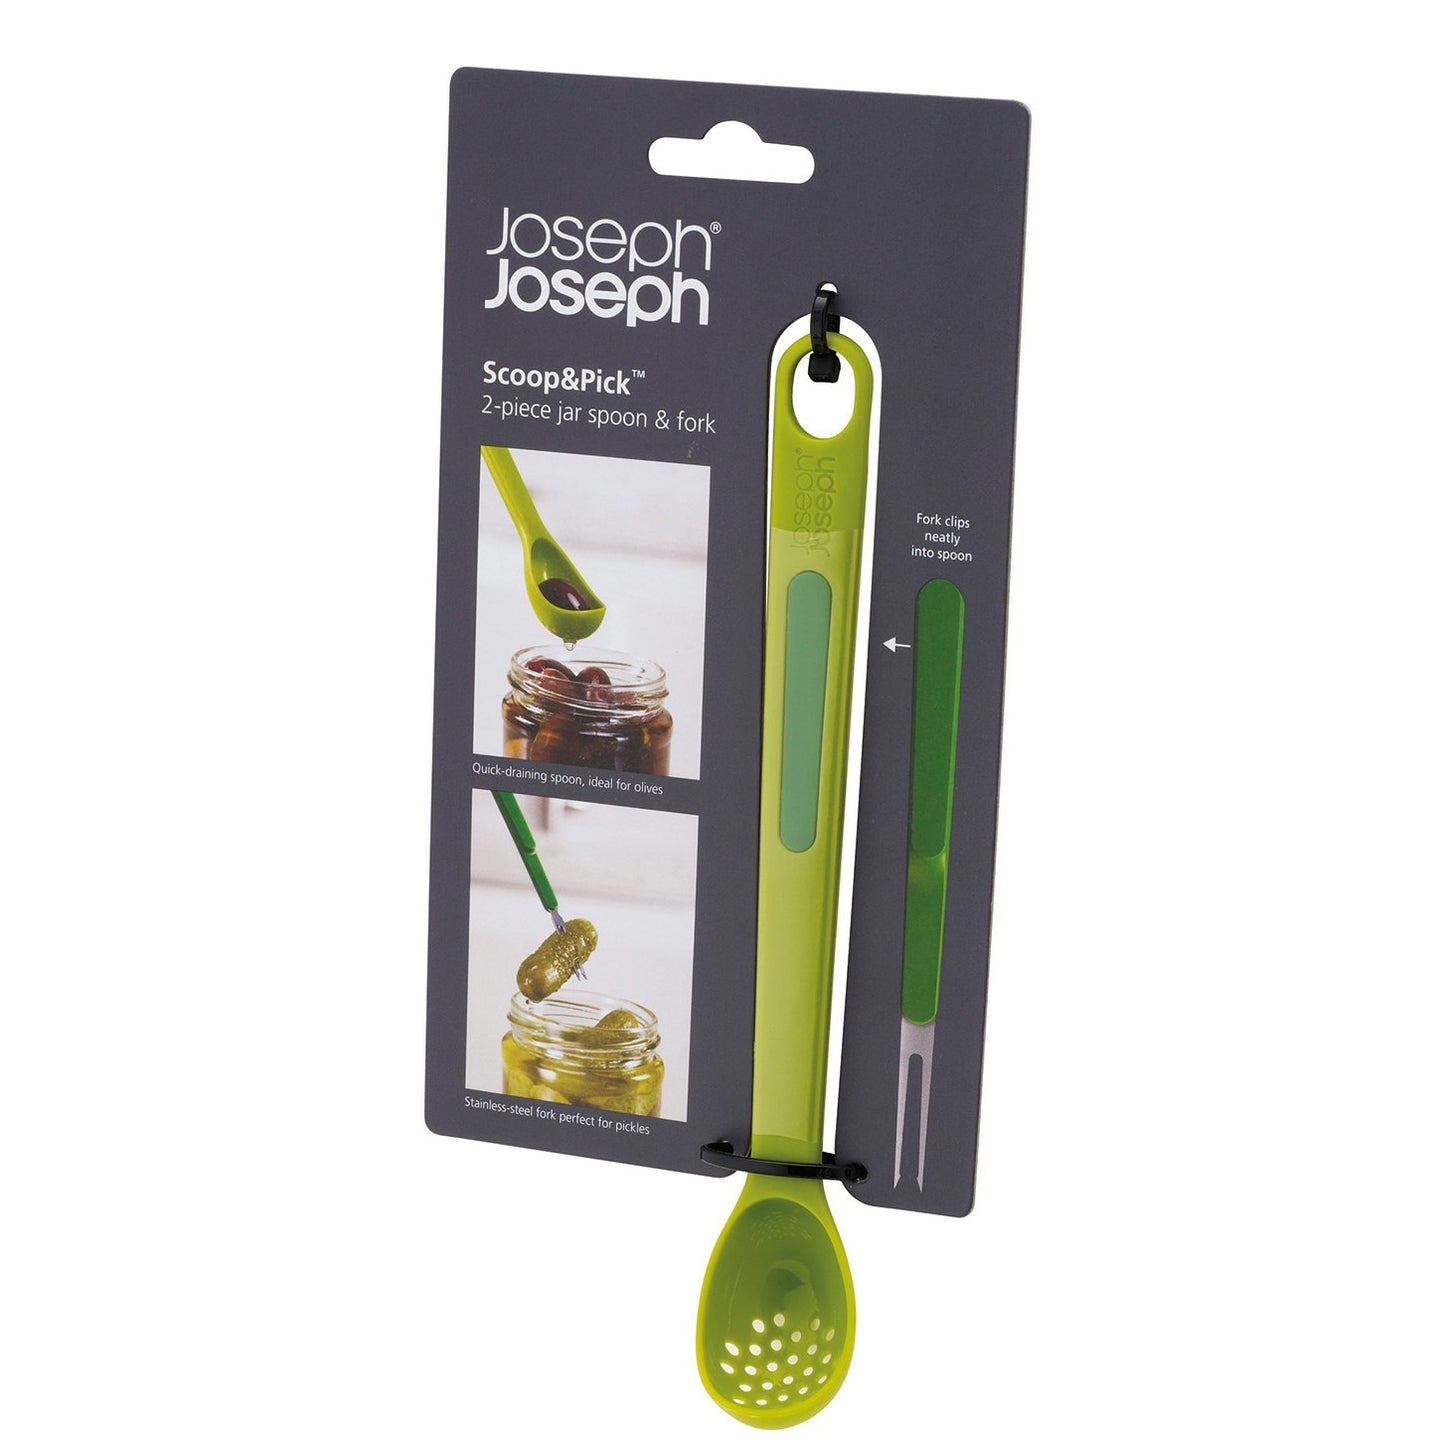 Joseph Joseph 2-Piece Scoop and Pick Jar Spoon and Fork - Green